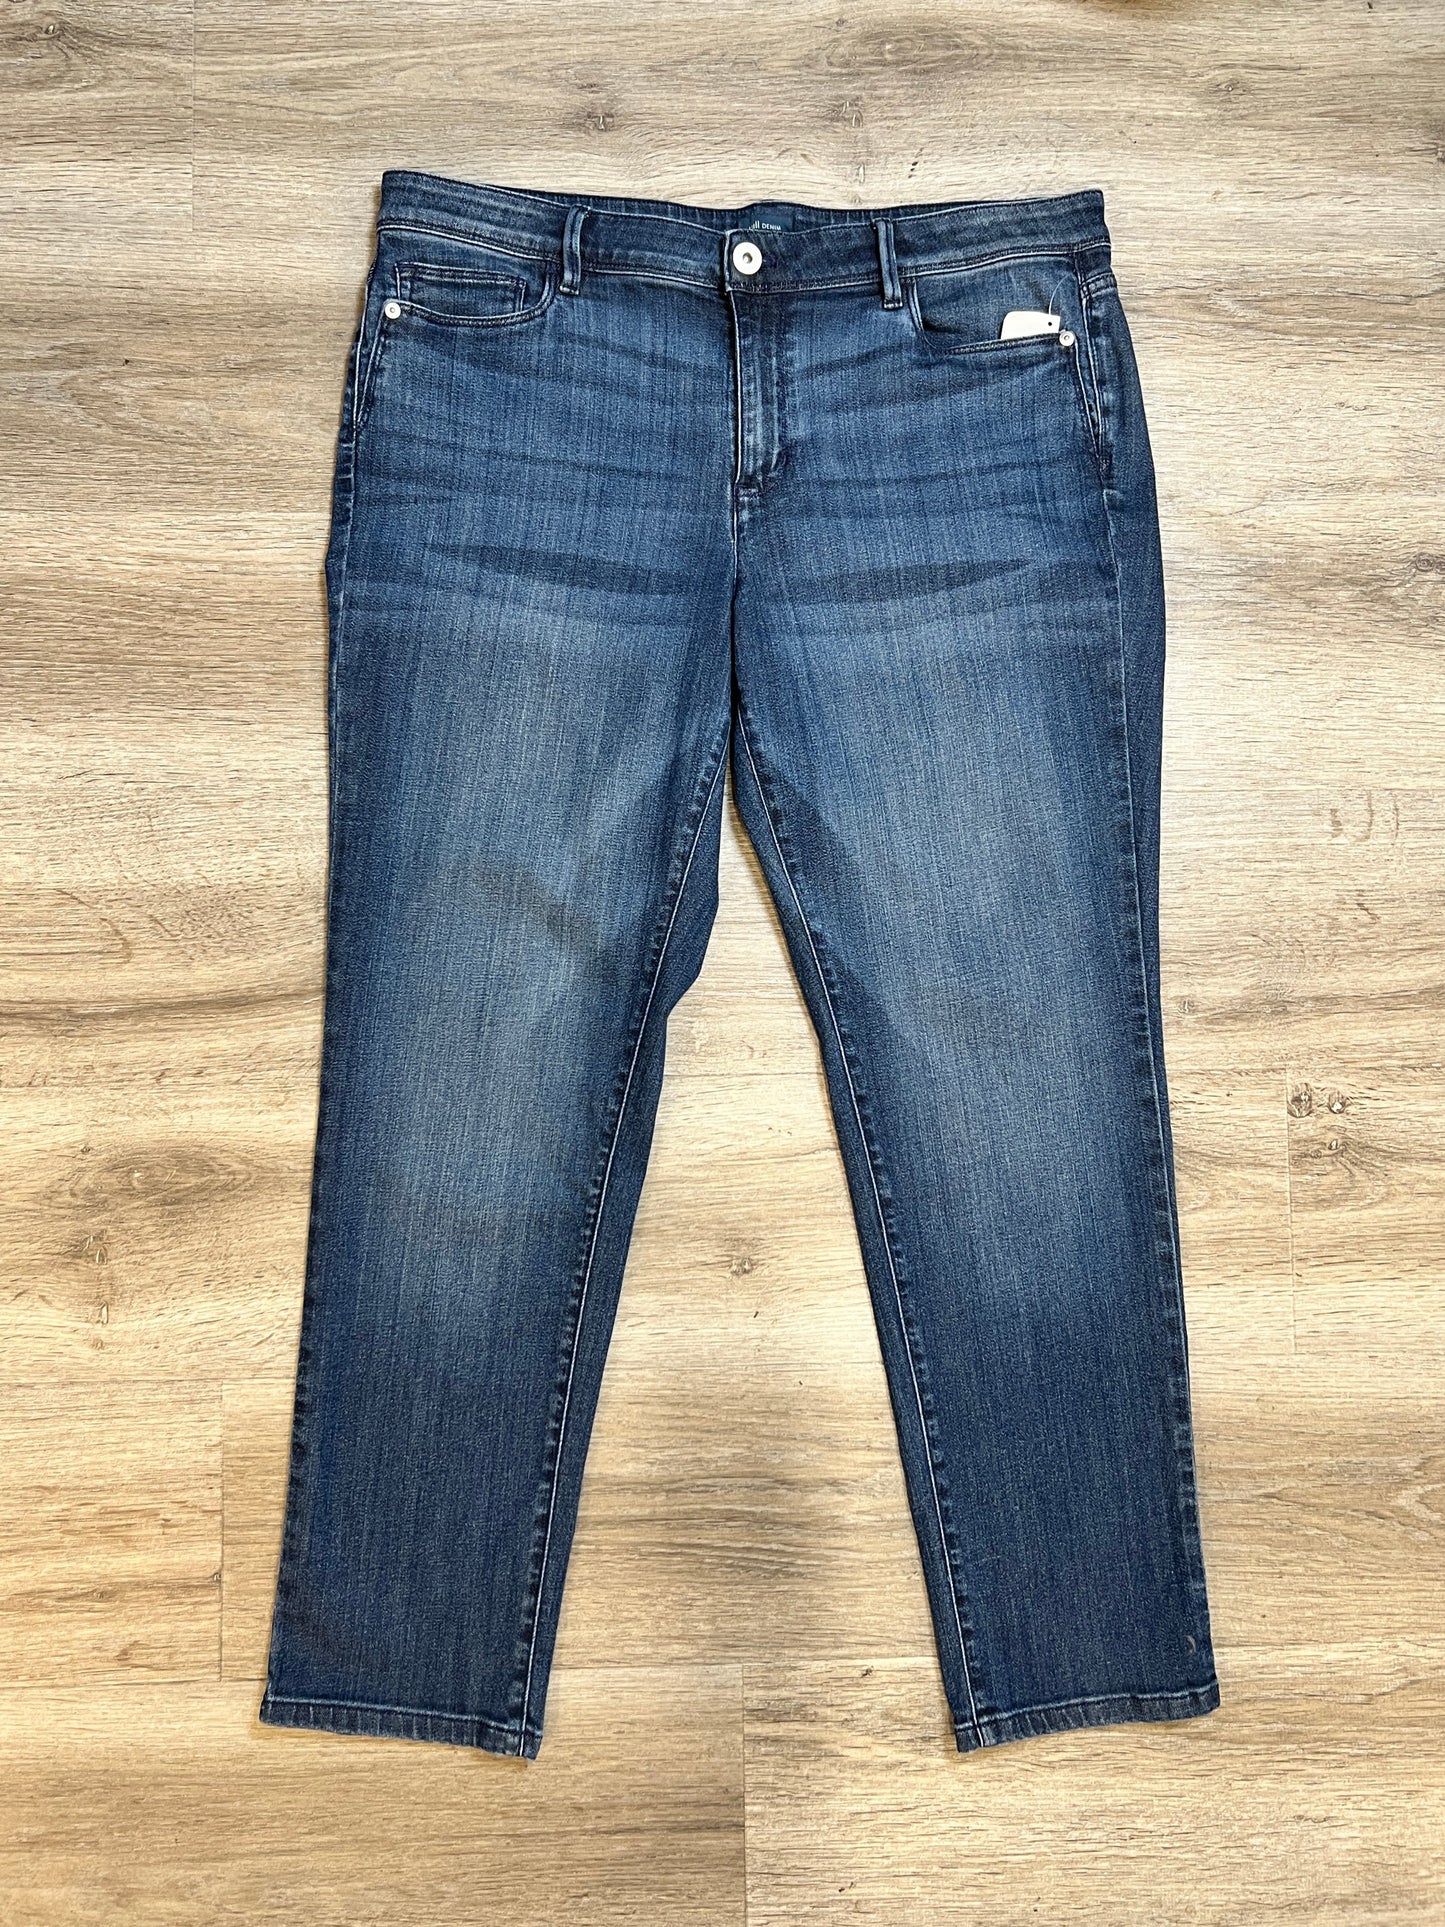 Jeans Straight By J Jill  Size: 14